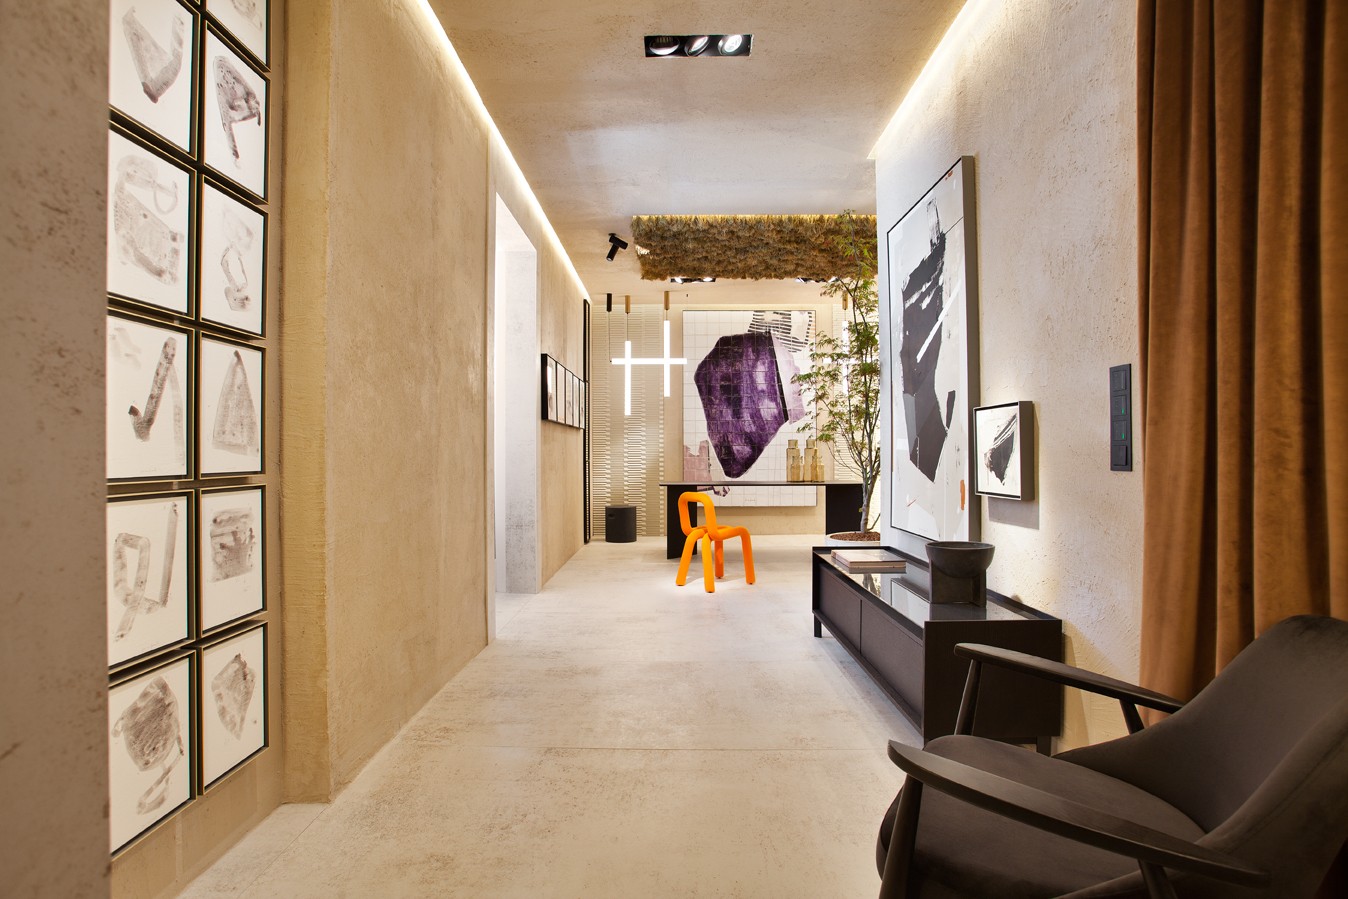 Image of casa decor 2022 espacio jaime jurado y monica bartolessis cafe de artista 01 in A journey to the best of Art Deco Paris through a bathroom - Cosentino